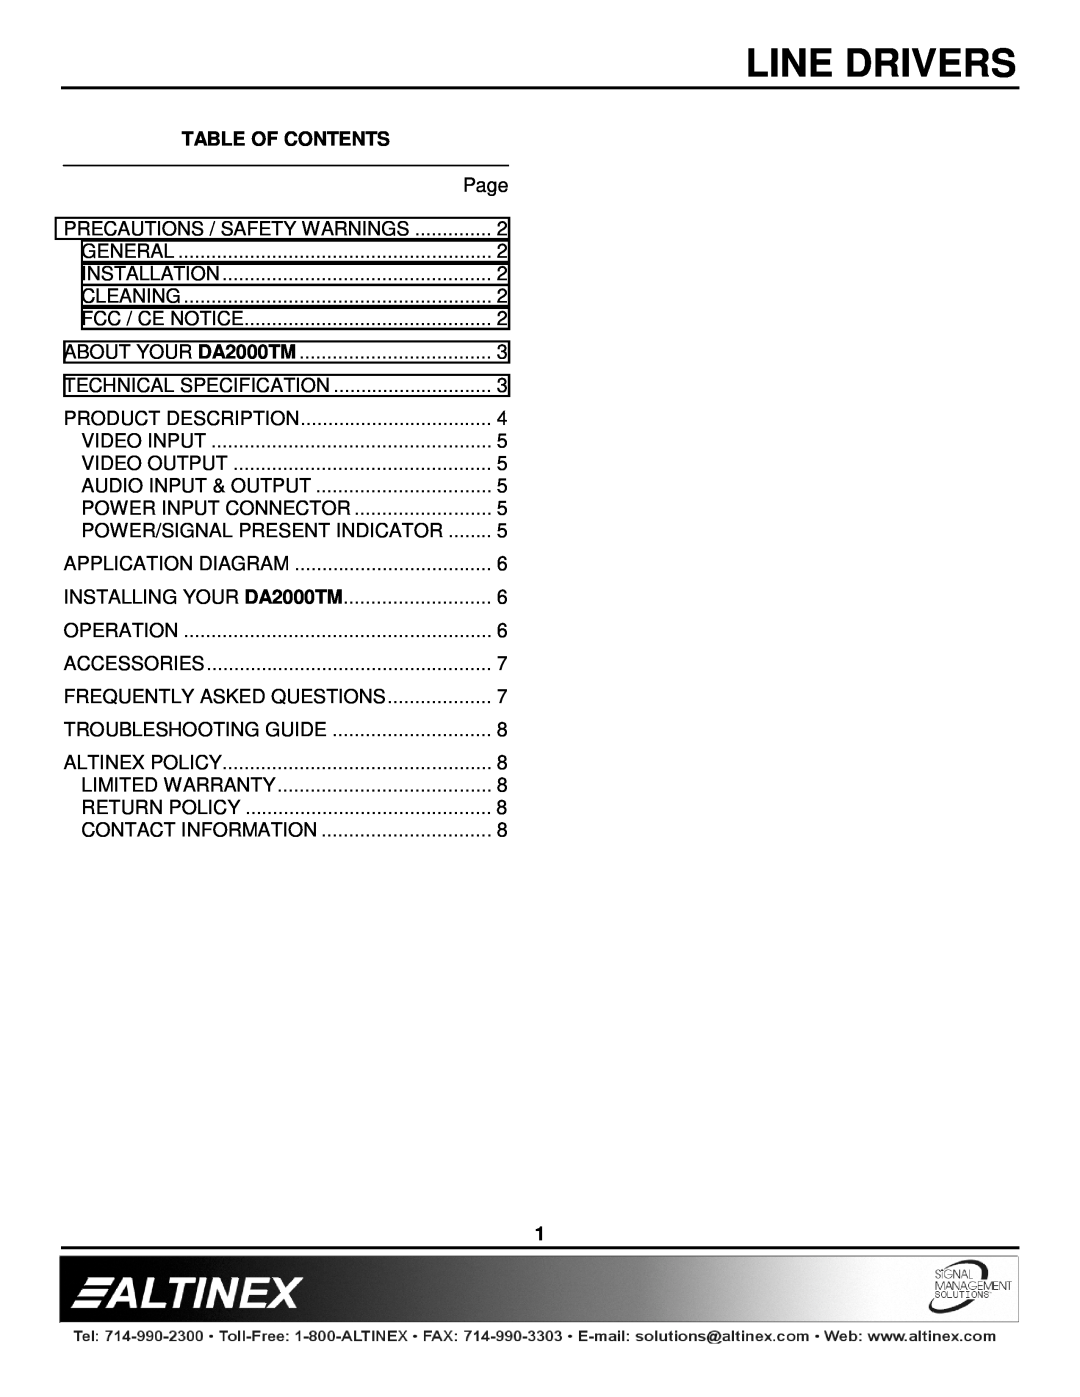 Altinex DA2000TM manual Table Of Contents, Line Drivers 